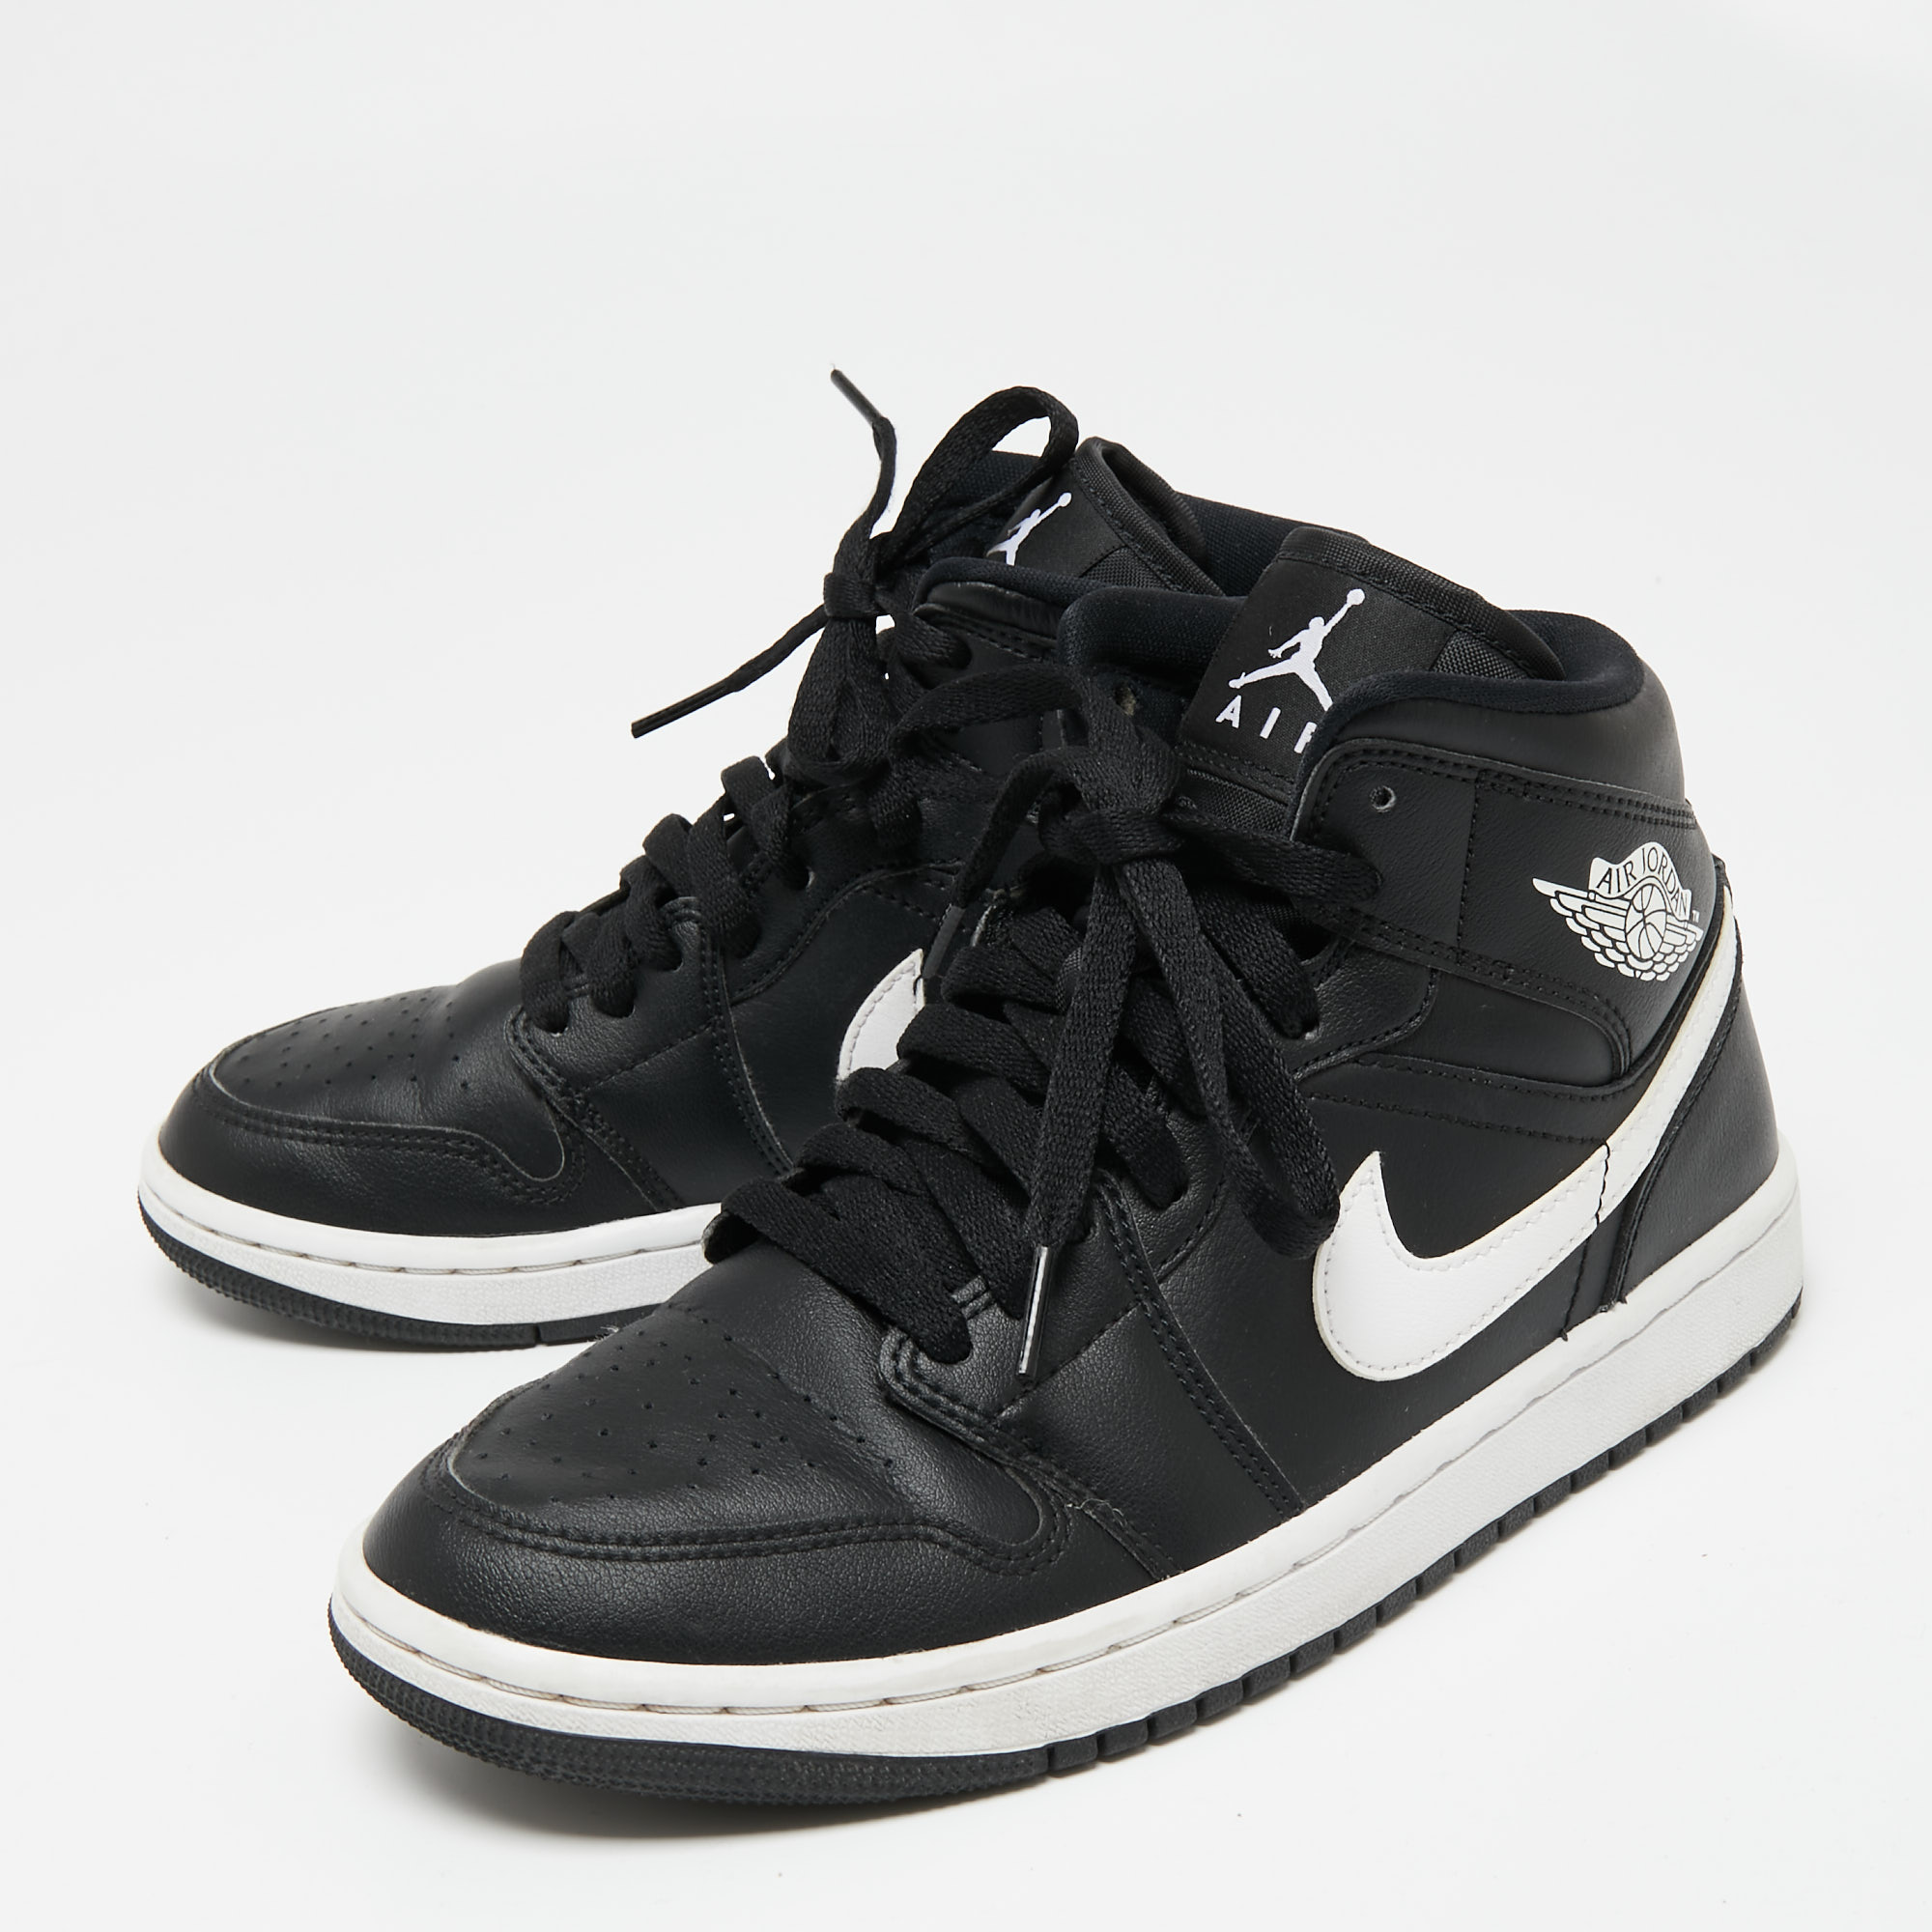 

Air Jordan x Nike Black/White Leather Air Jordan 1 Retro High Yin Yang Sneakers Size